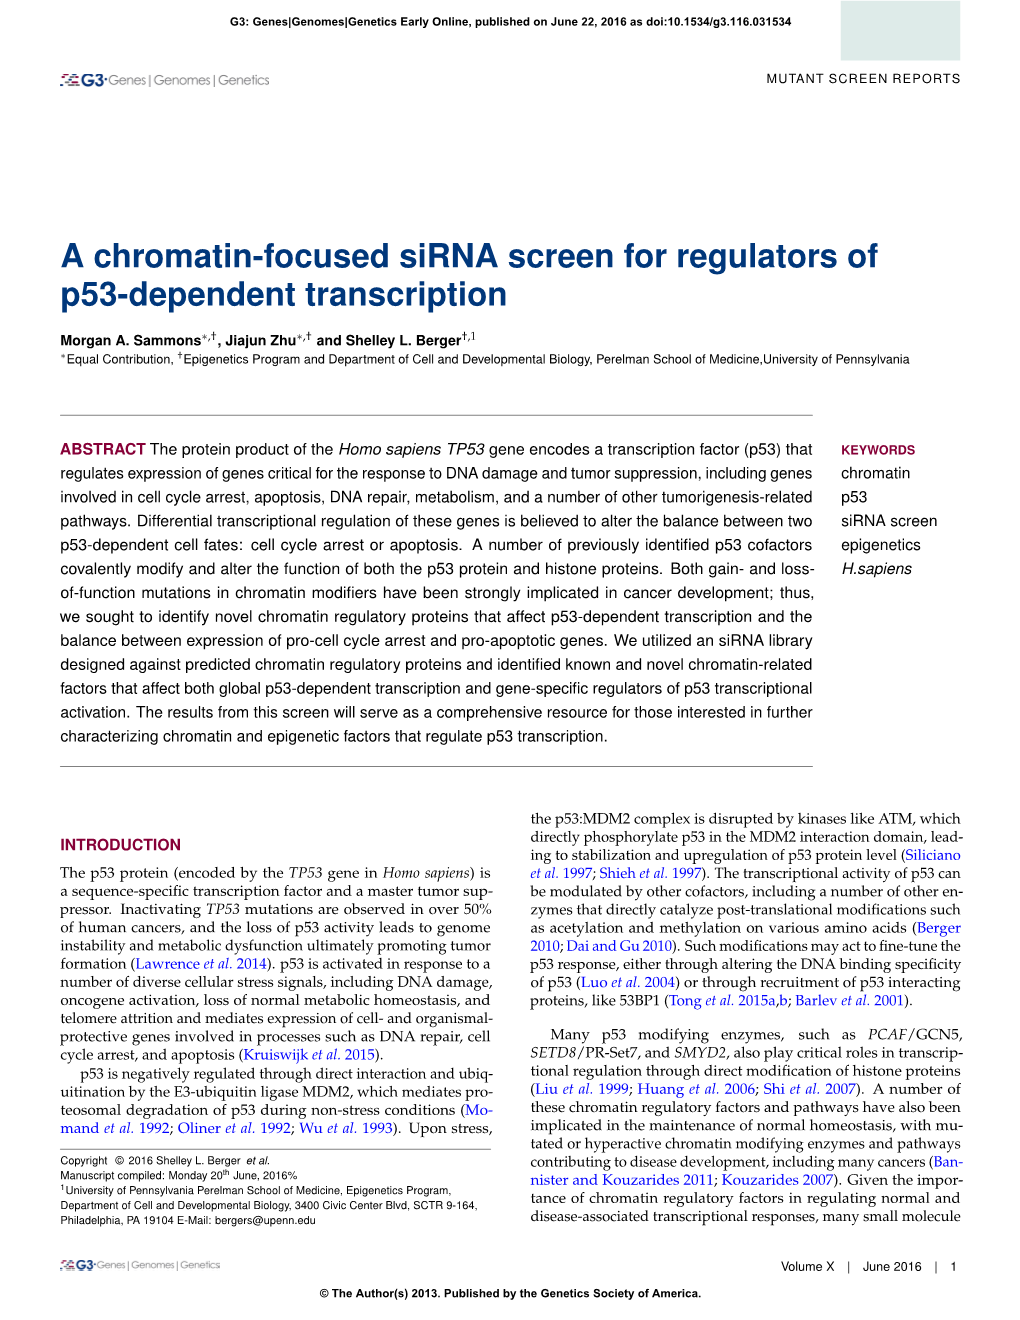 A Chromatin-Focused Sirna Screen for Regulators of P53-Dependent Transcription